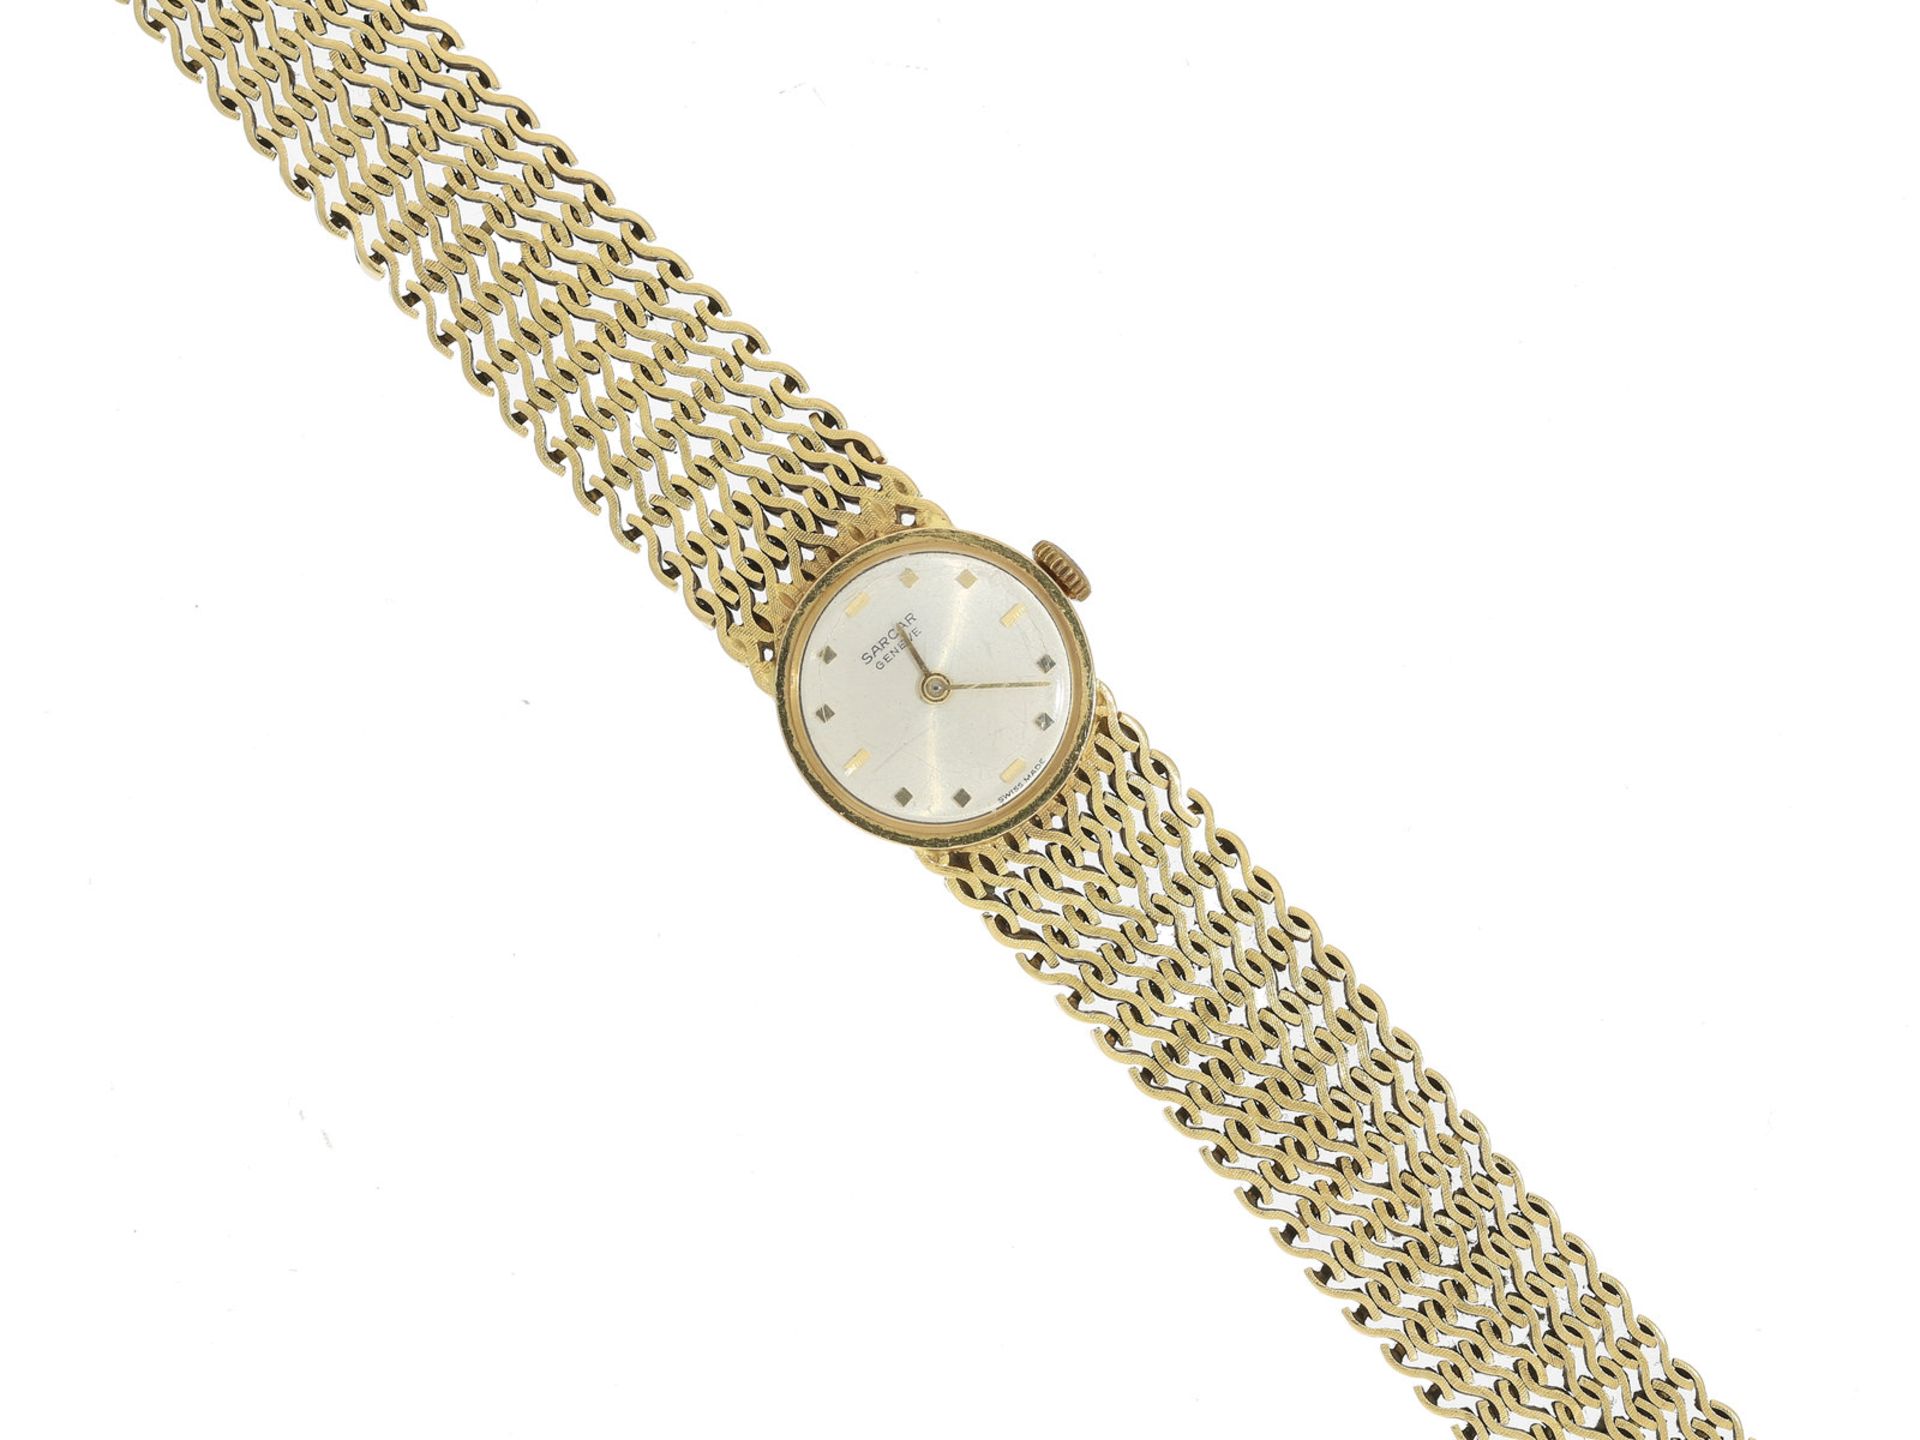 Armbanduhr: schwere, goldene Damenuhr der Marke "Sarcar", 18K GoldCa. Ø19mm, ca. 18cm lang, ca. 46g,